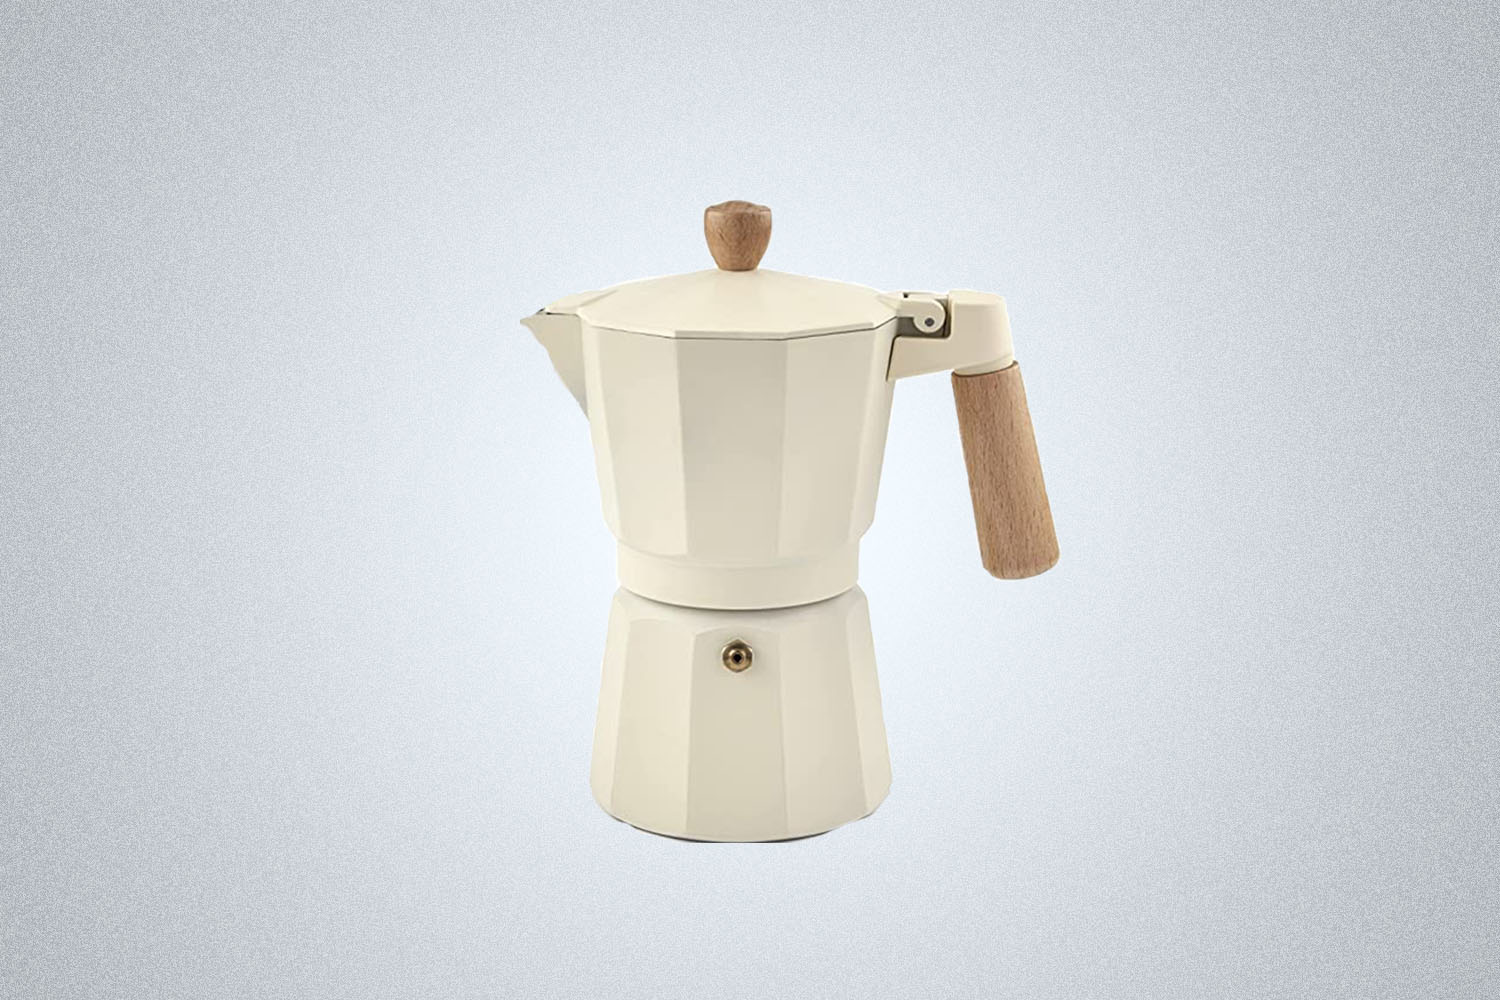 https://www.insidehook.com/wp-content/uploads/2022/10/Elegant-Foodie-Stovetop-Coffee-Maker.jpg?fit=1200%2C800